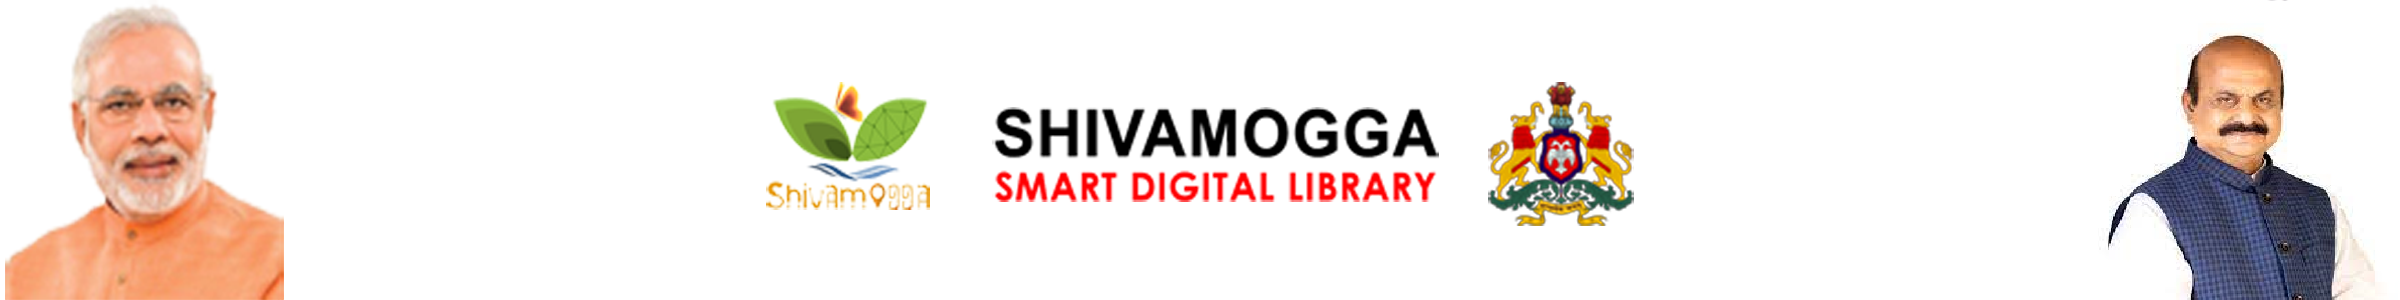 Shivamogga Digital Library Logo